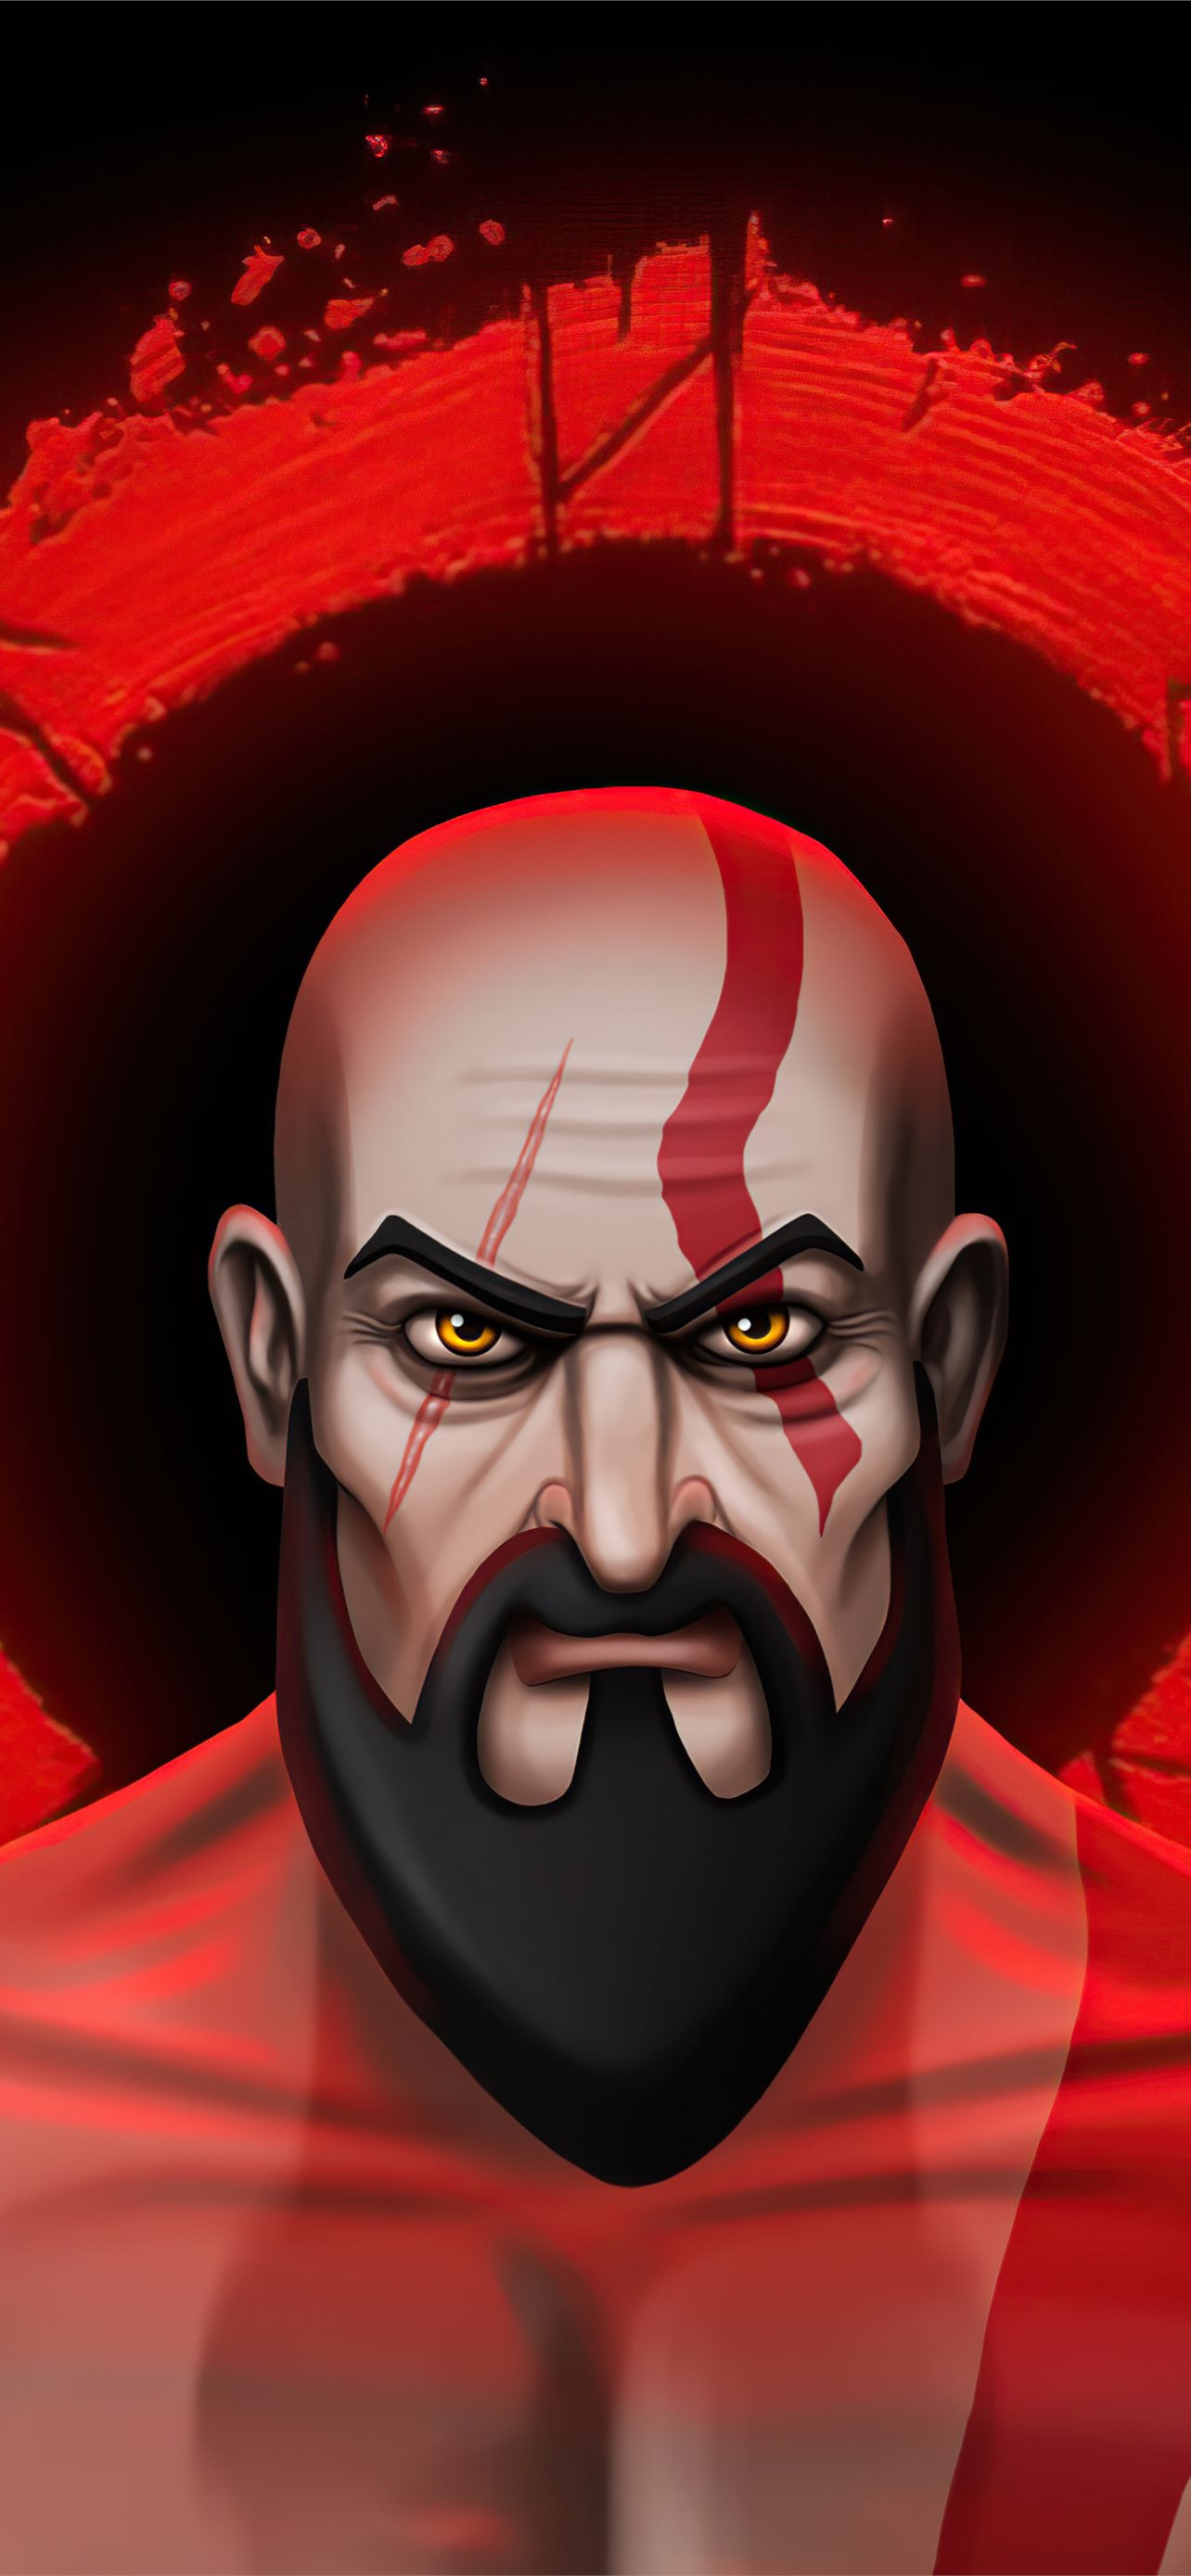 kratos cartoon illustration 5k iPhone wallpaper 